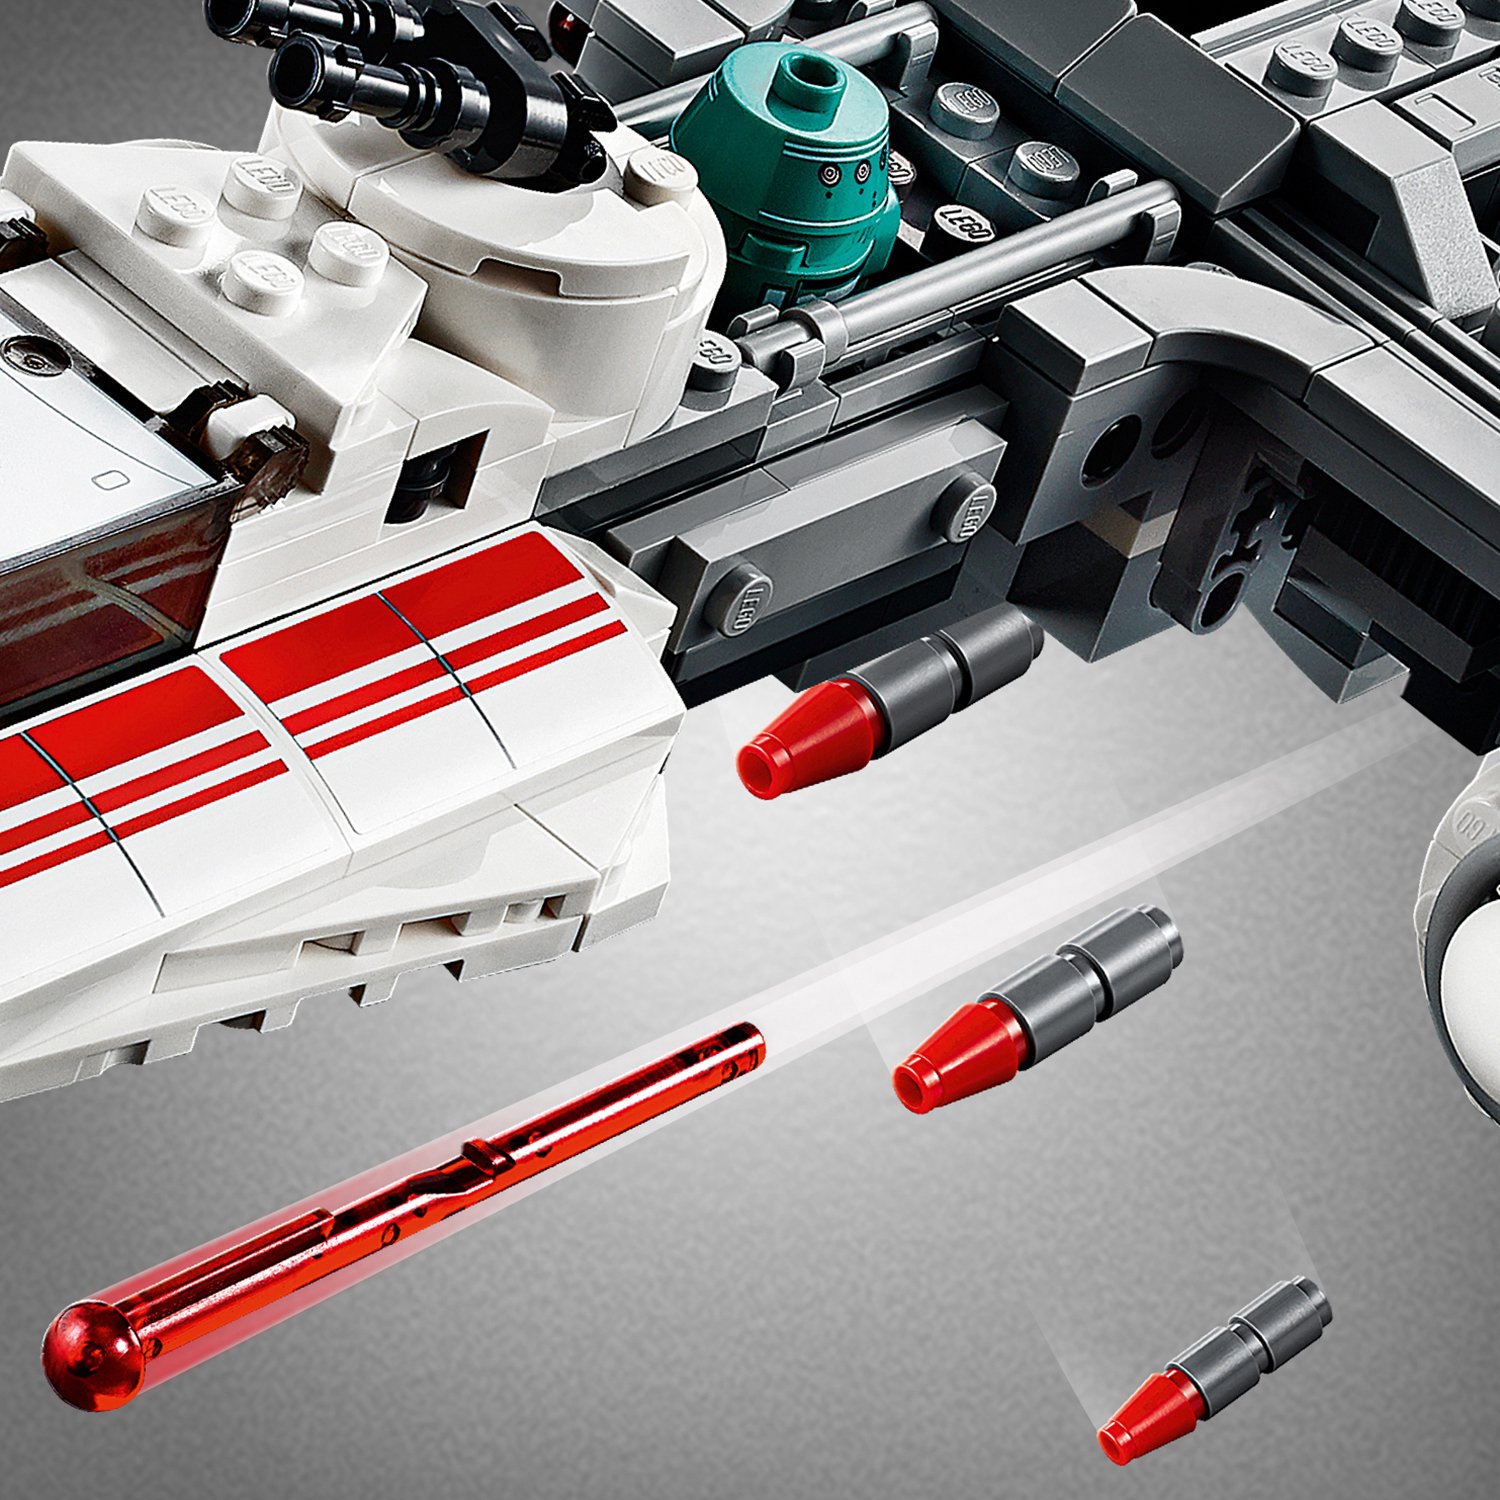 Lego Star Wars 75249 Звёздный истребитель Повстанцев типа Y